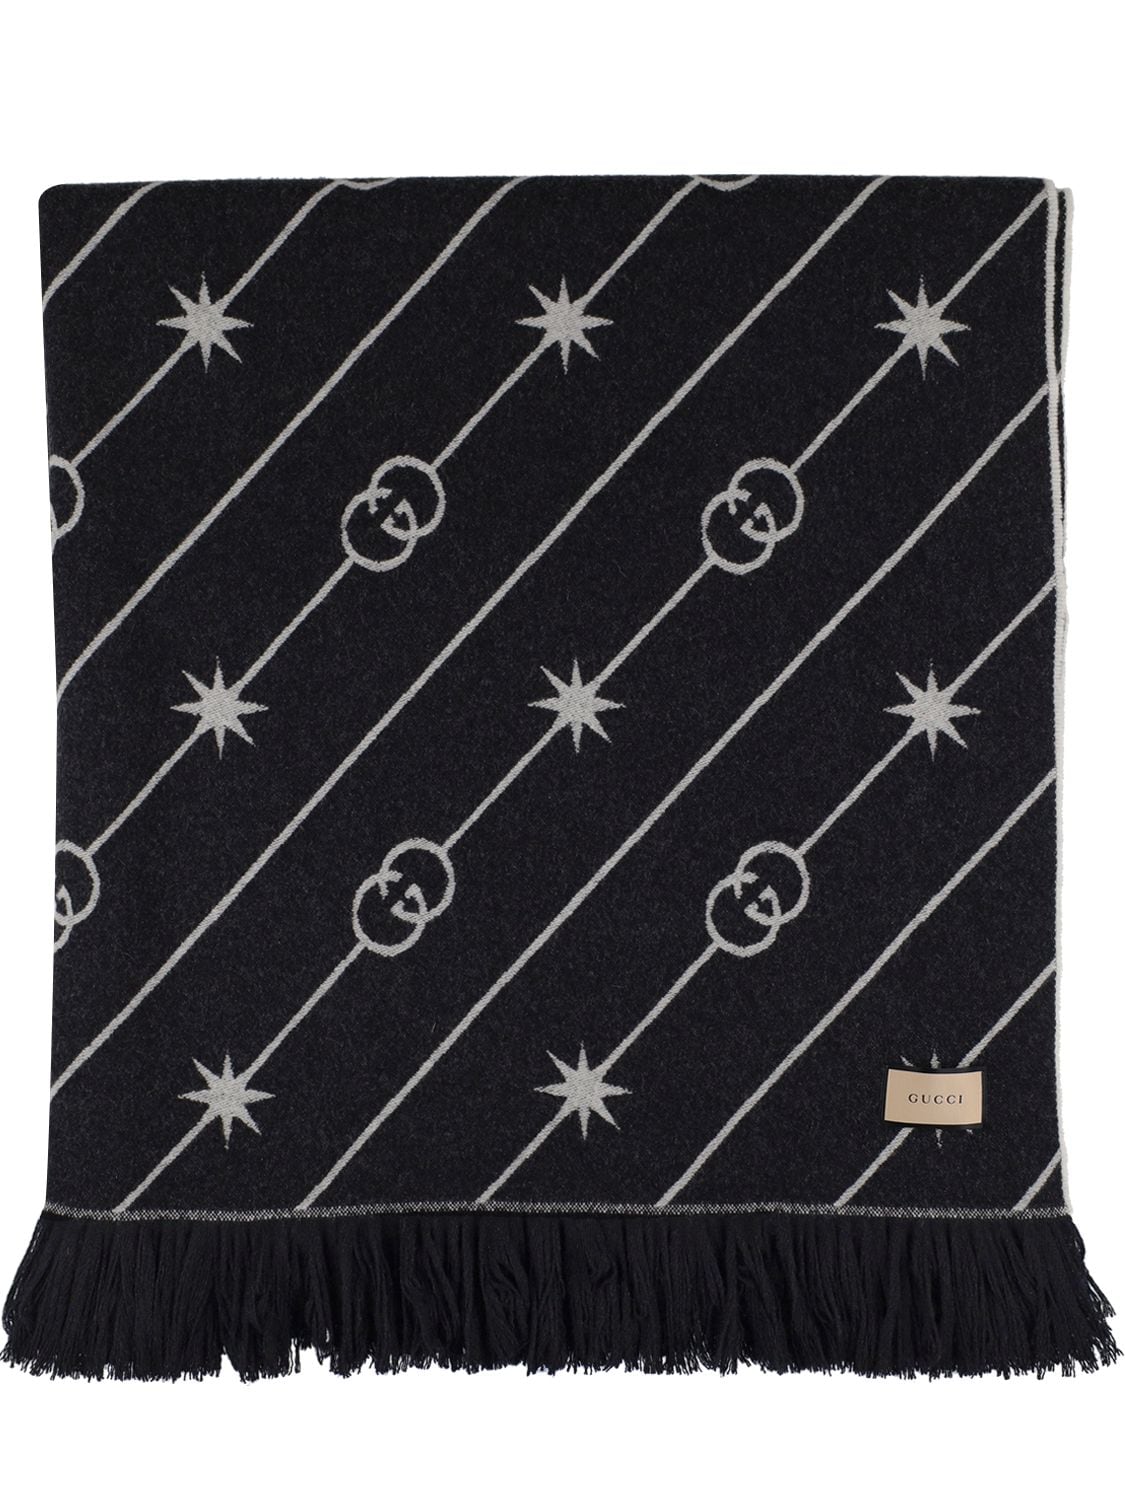 Gucci Wool Blend Blanket In Black,white